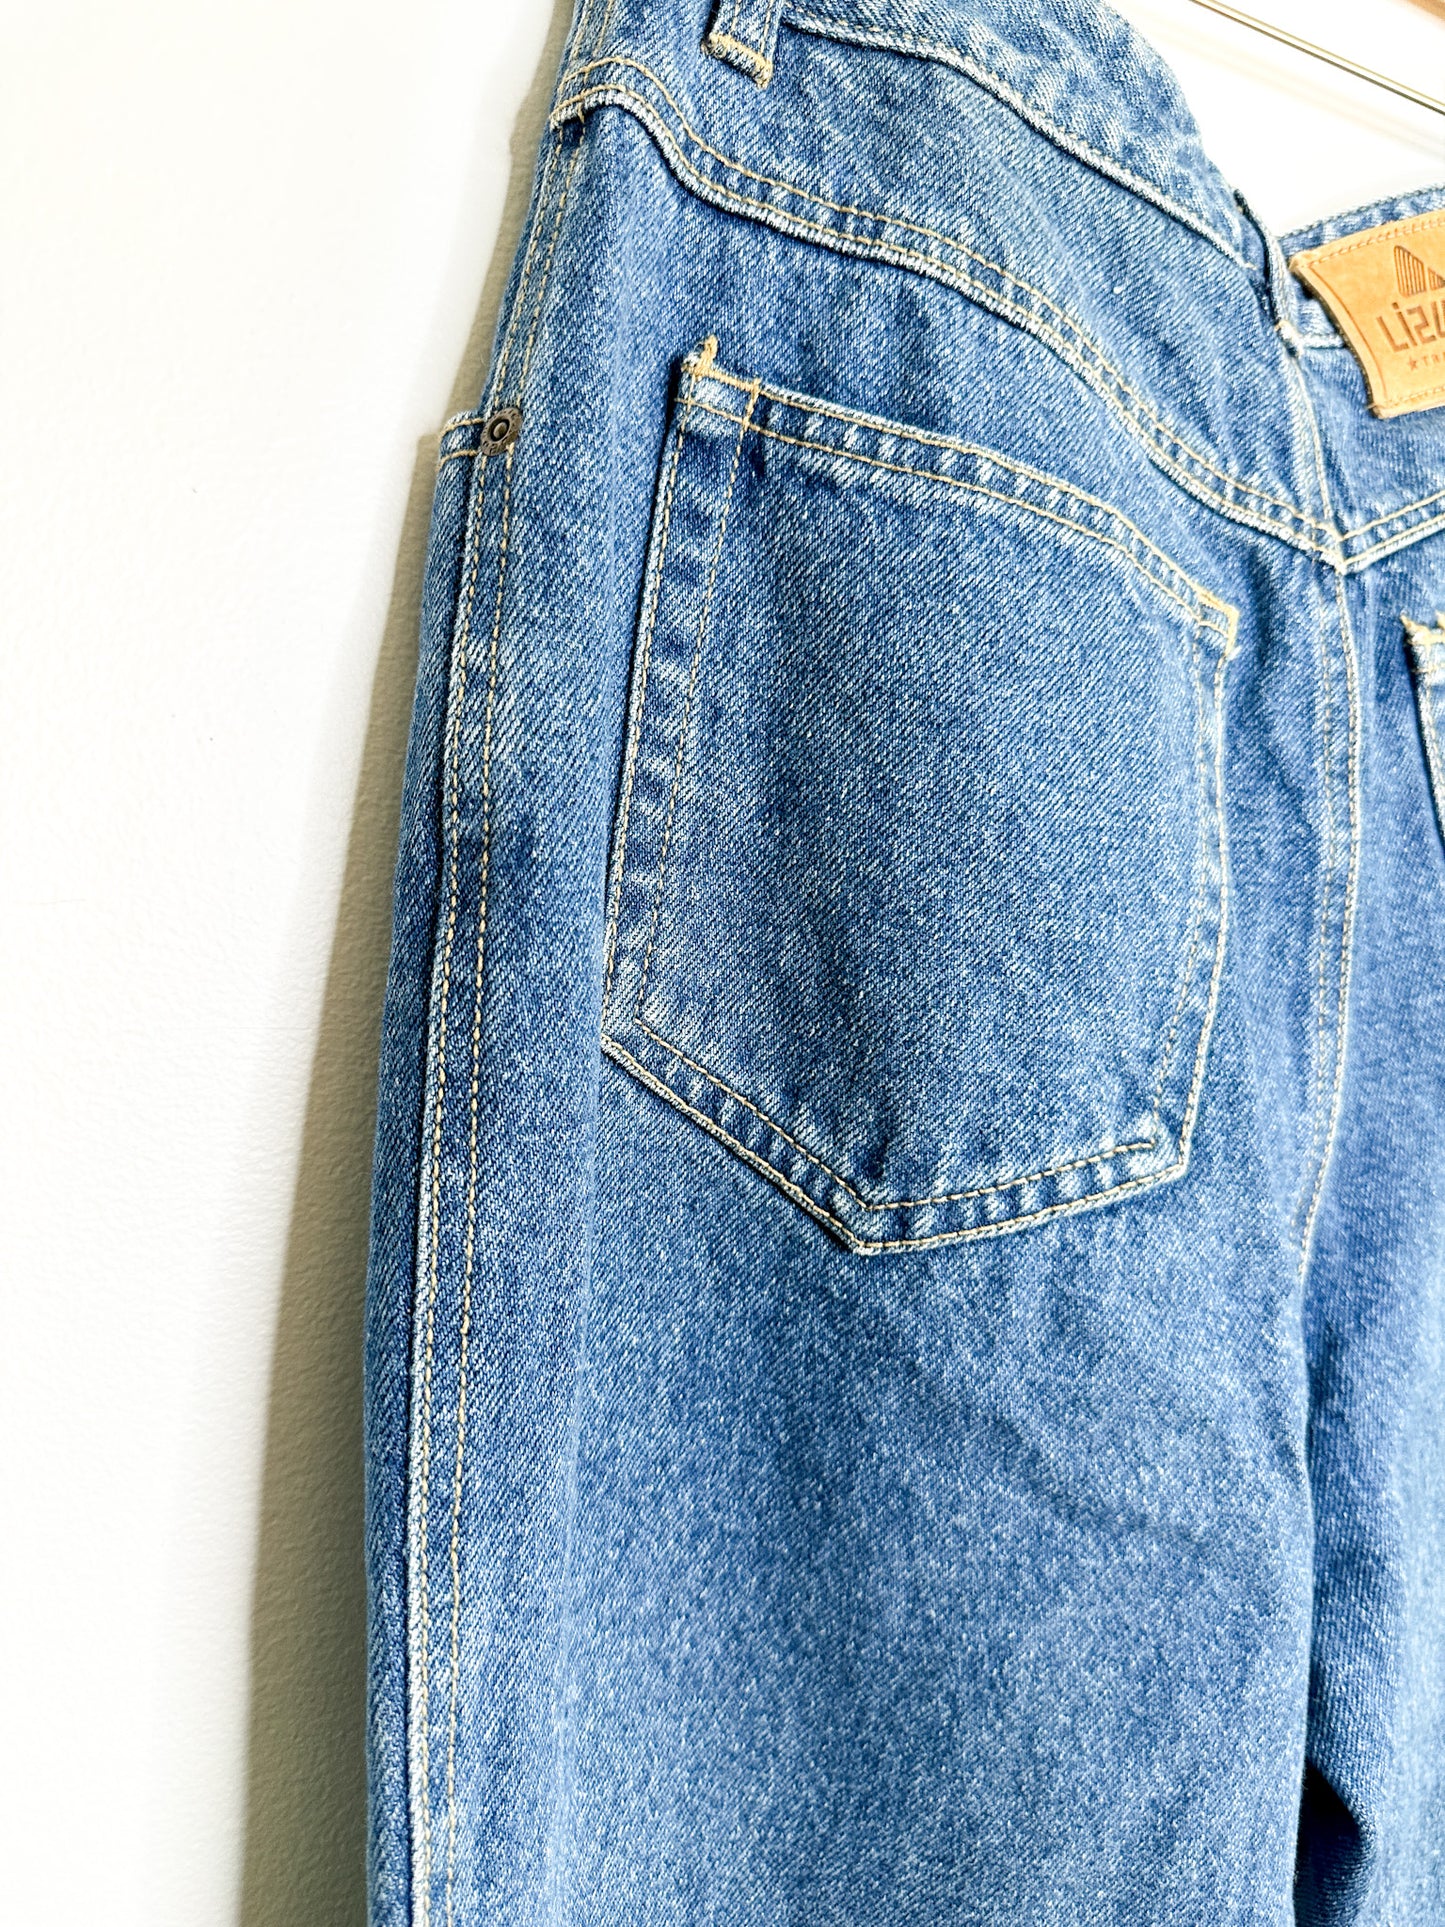 Vintage Liz Wear Denim/Jeans Size:12/ Mom Jeans French Girl Dressing